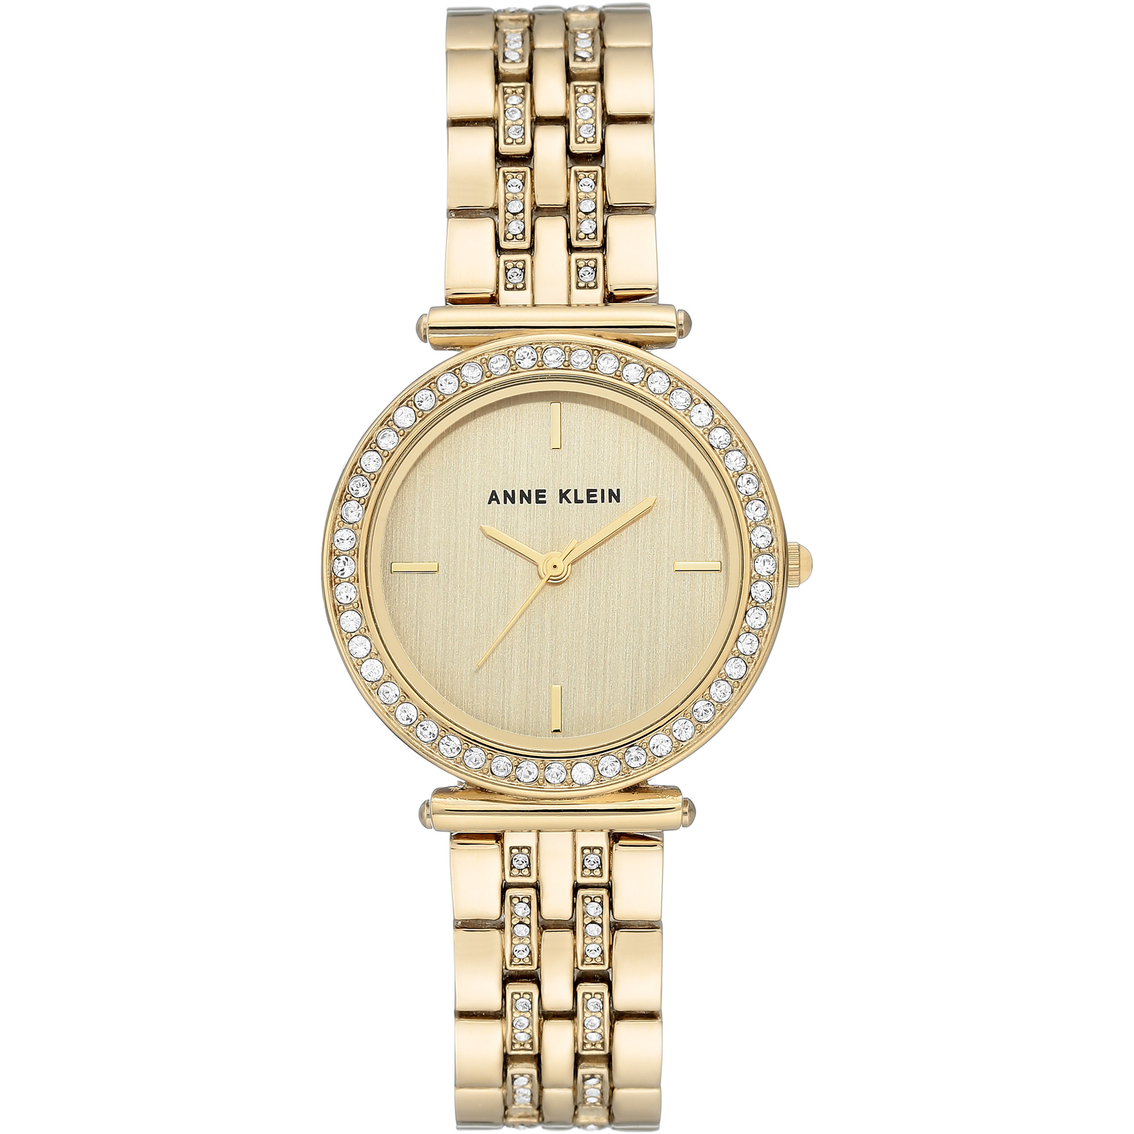 Anne Klein Women's Swarovski Crystal Accented Goldtone Bracelet Watch